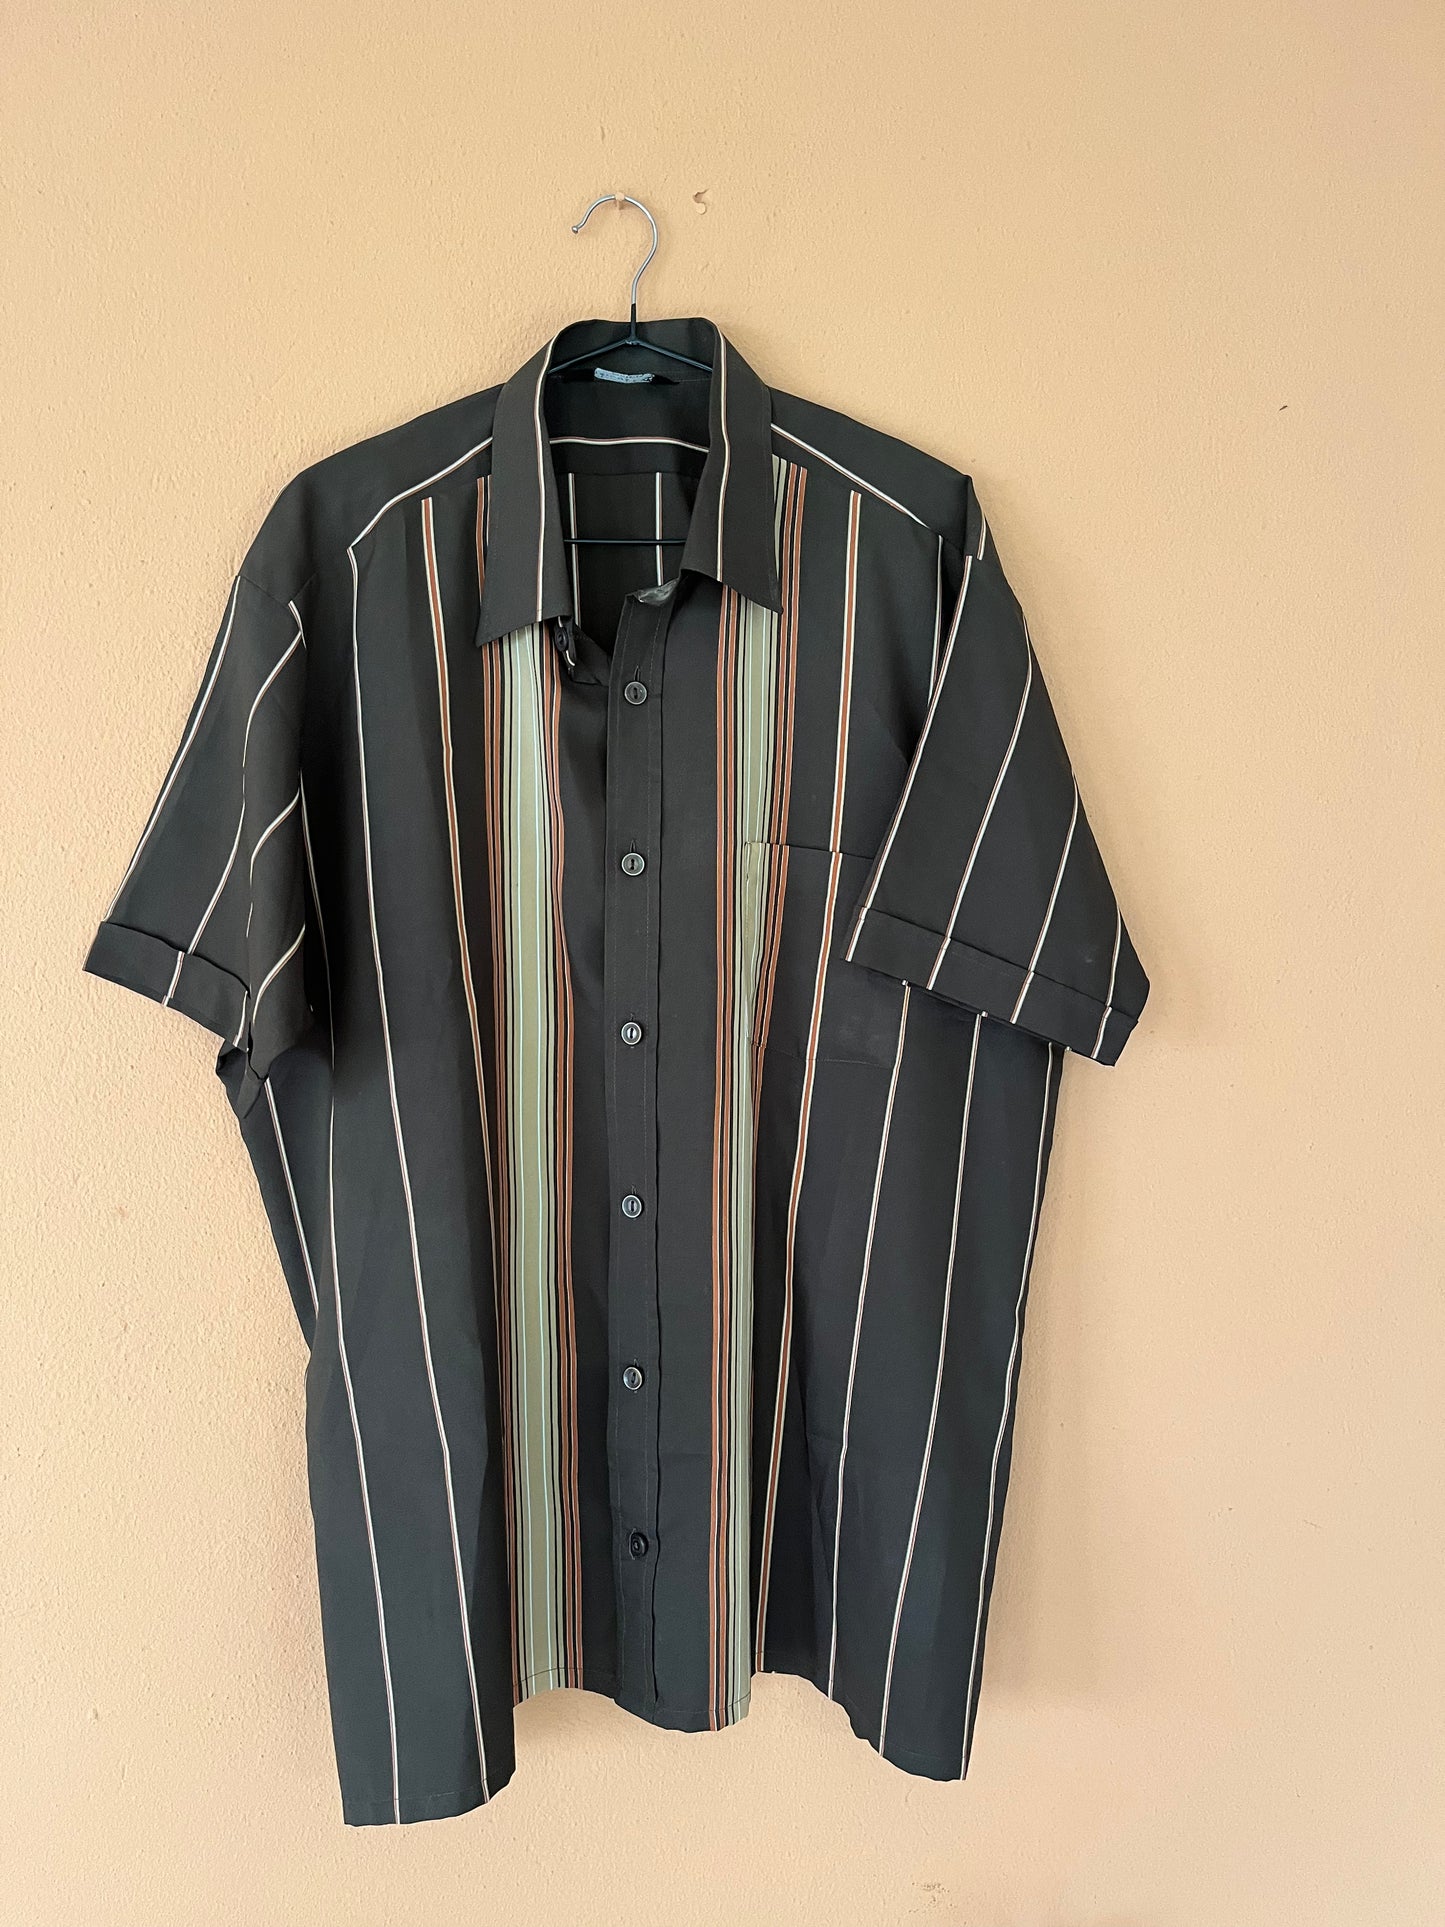 Vintage Striped Summer Shirt